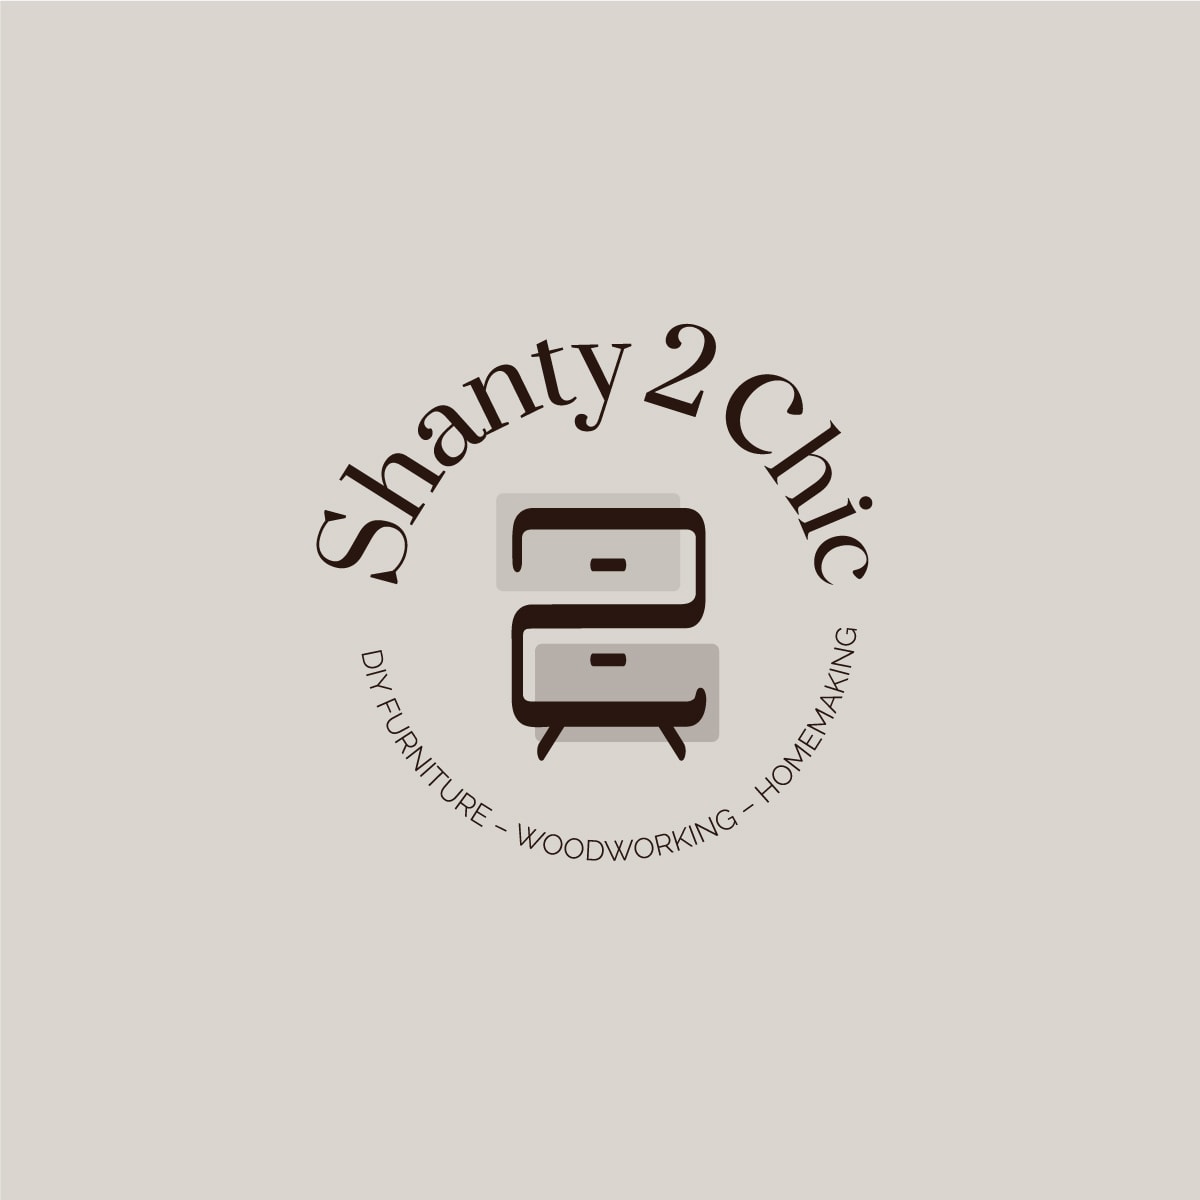 Shanty 2 Chic Blog Submark Logo monochroatic on light background